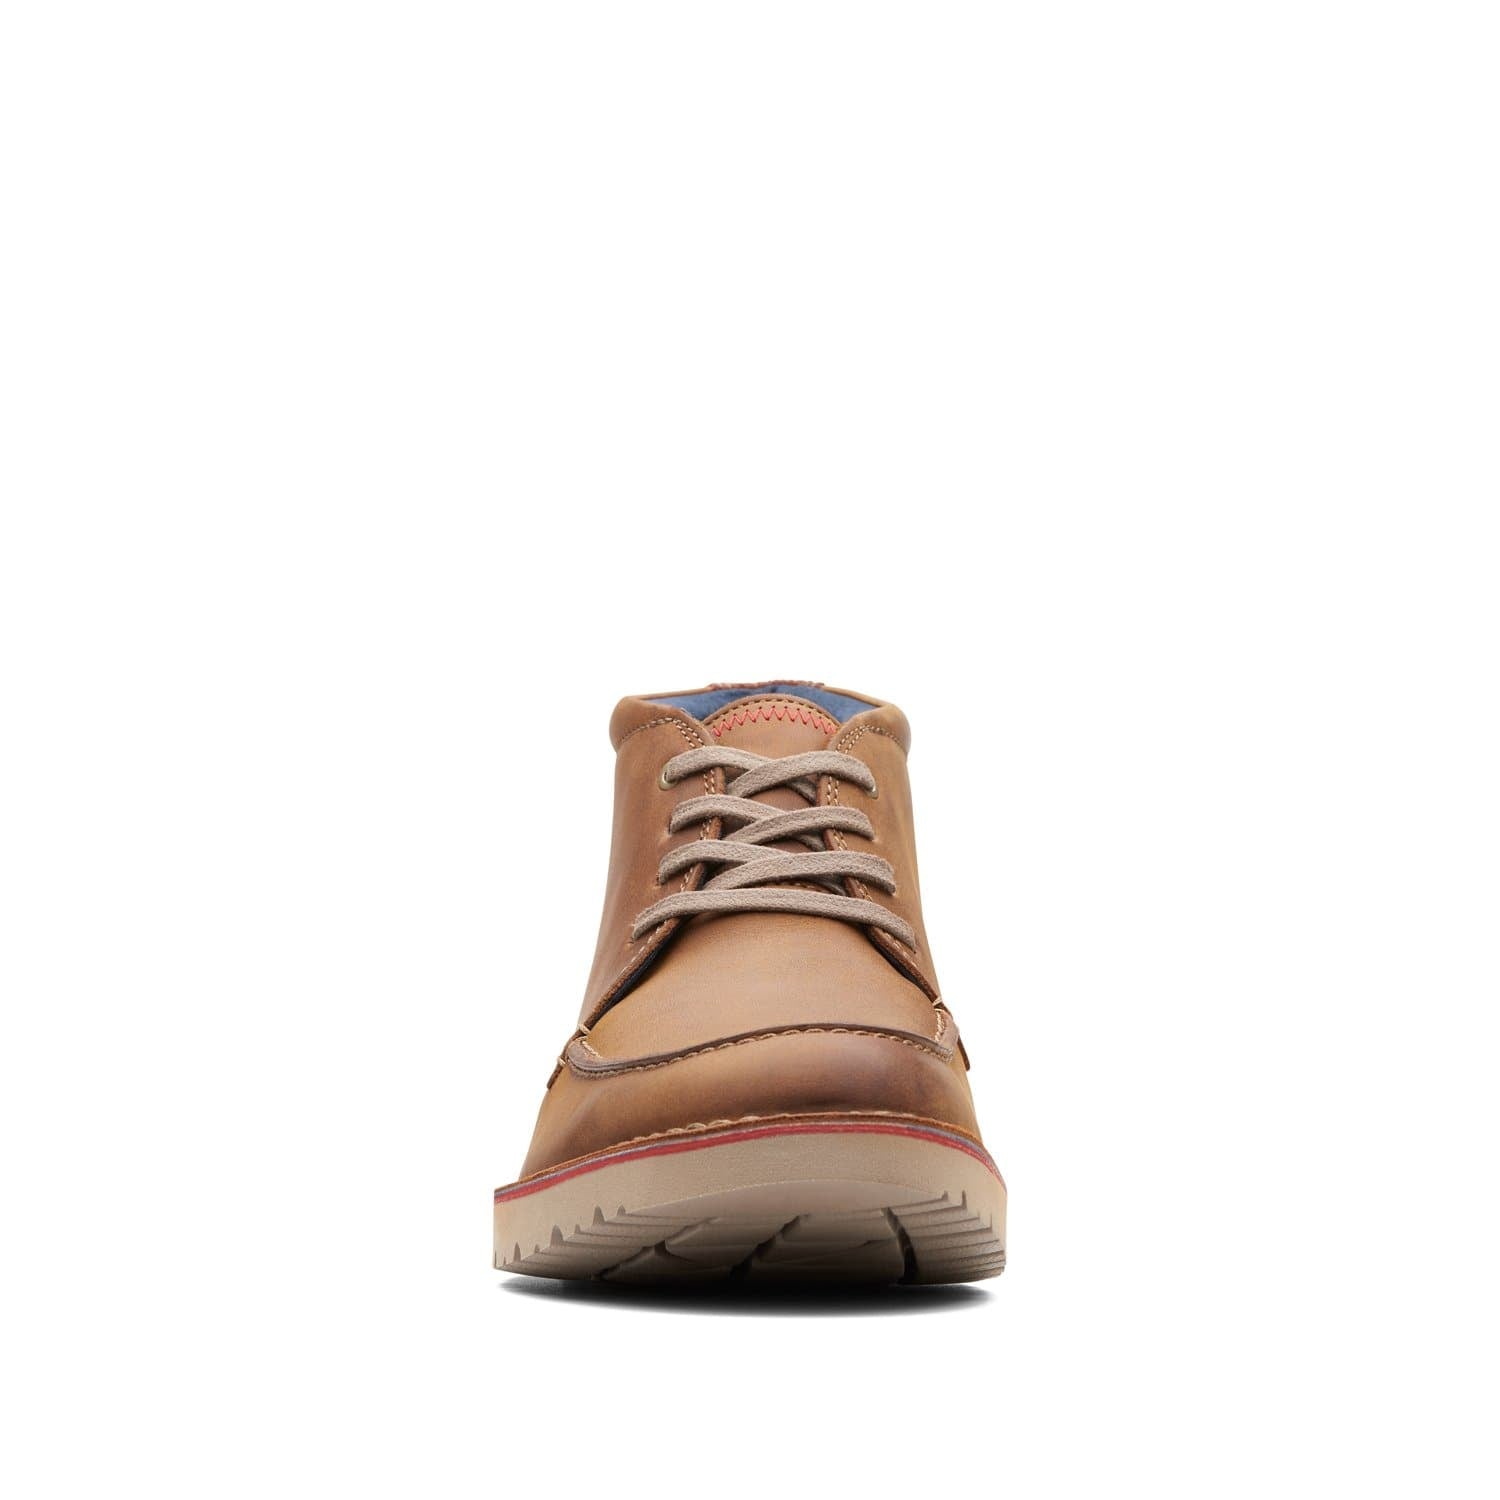 Clarks-Vargo-Rise-Men's-Boots-Dark-Tan-Leather-26136680